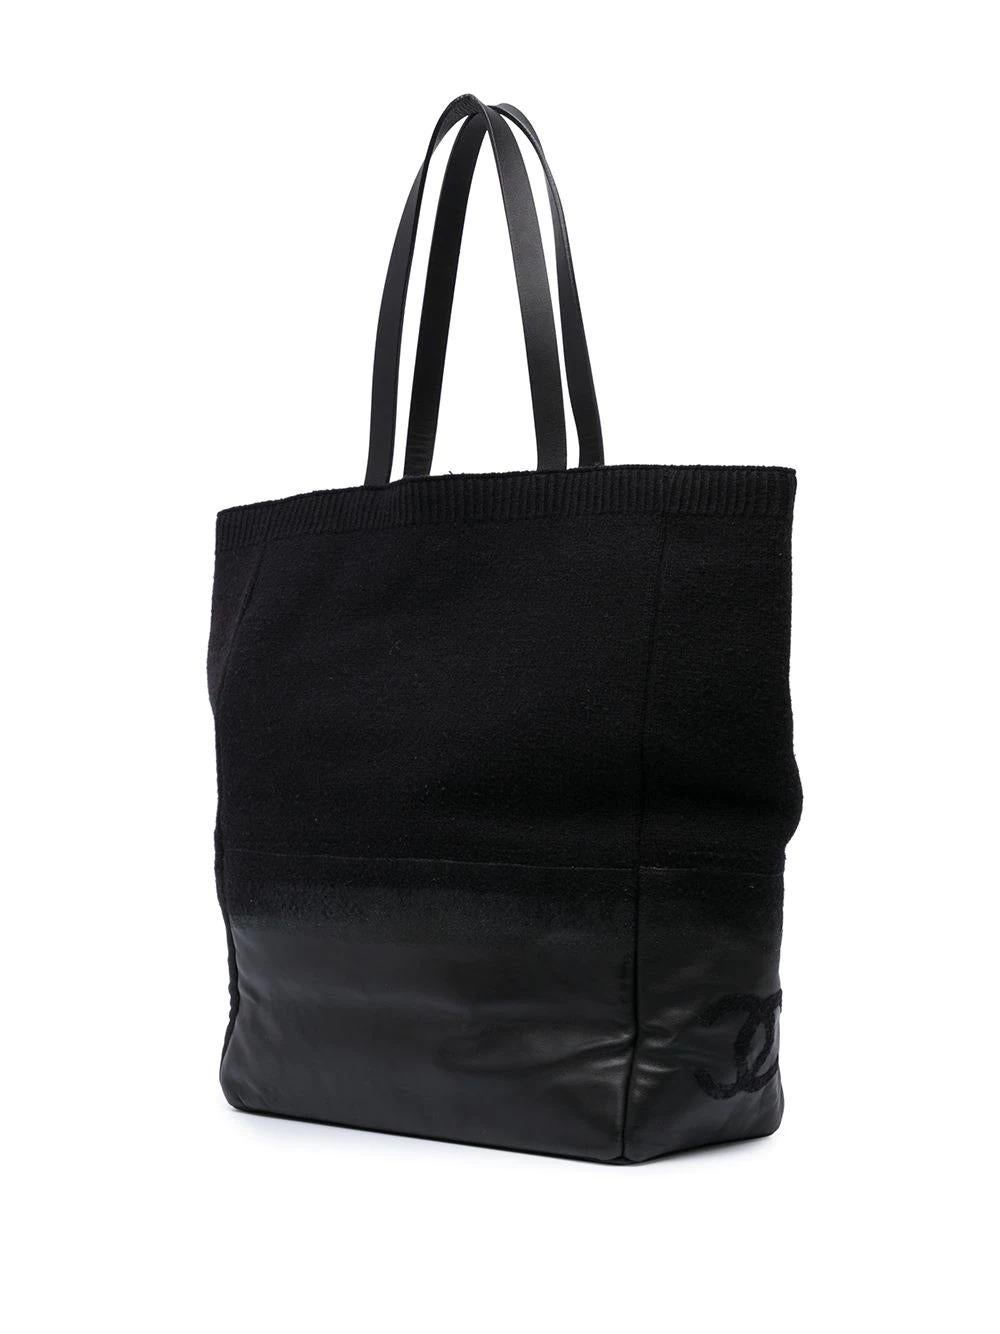 Black Chanel Wool Tote Bag